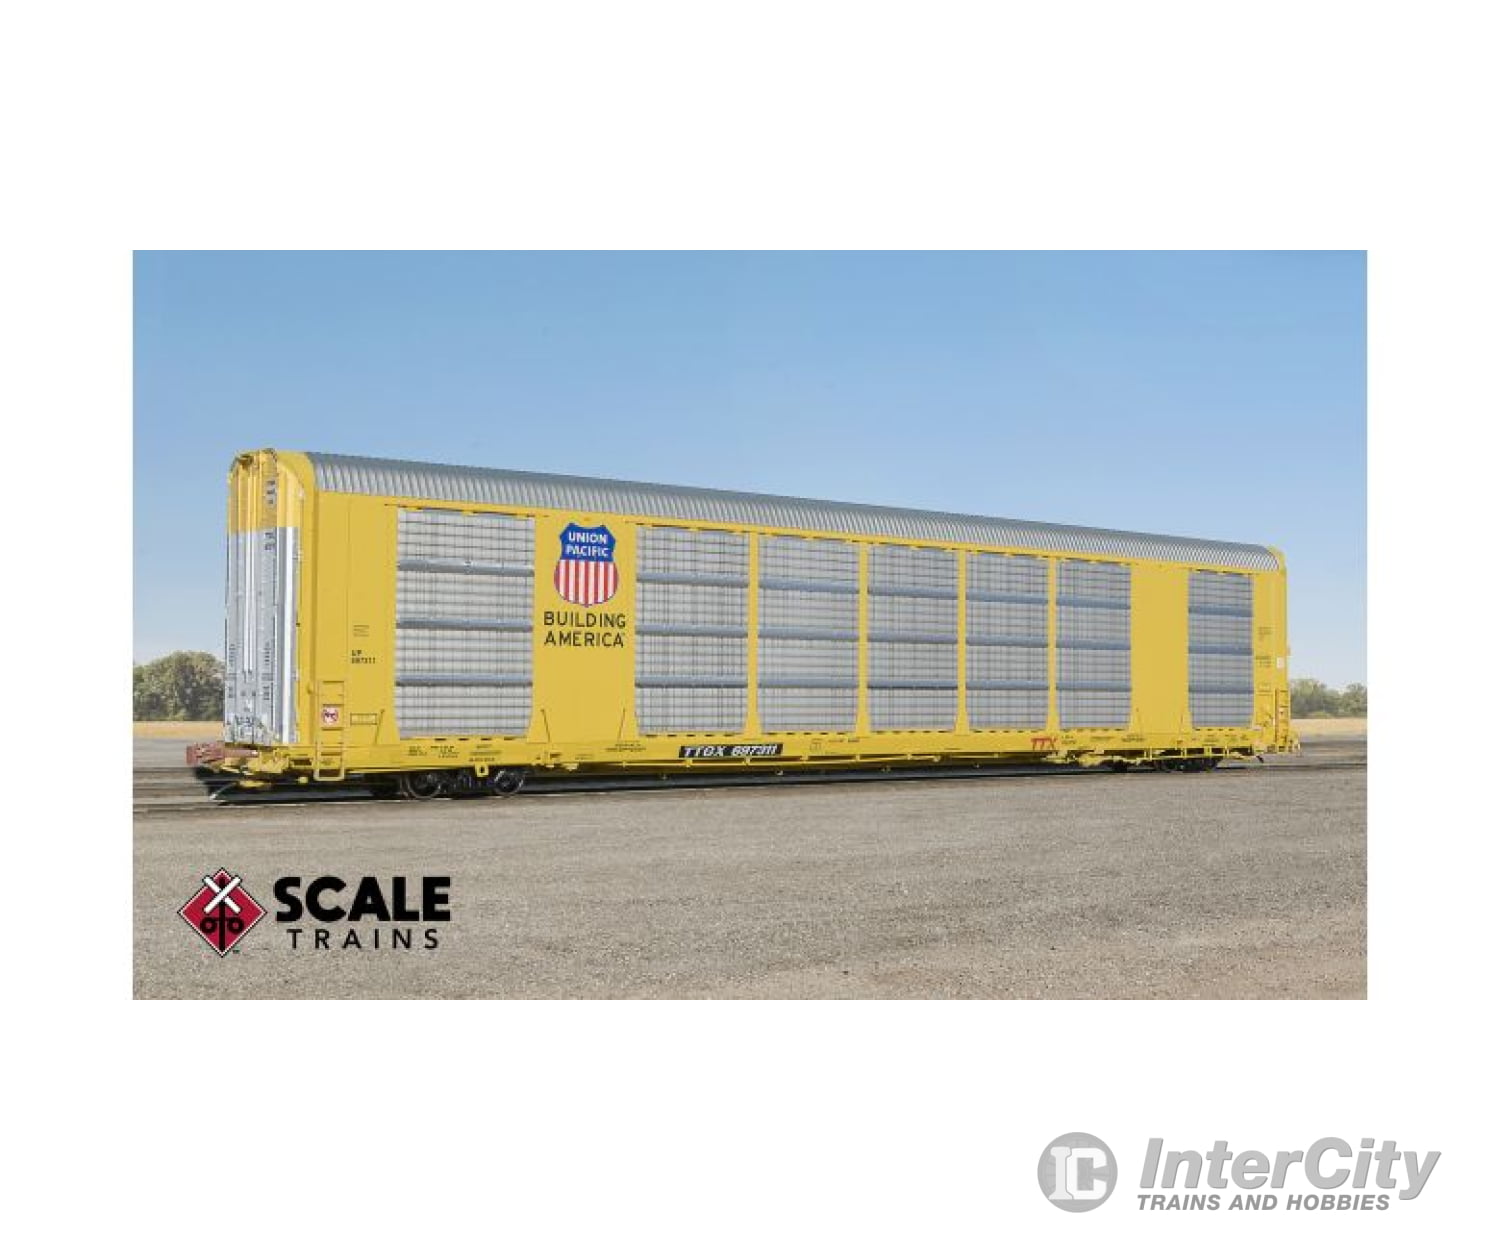 Scale Trains Sxt32783 Gunderson Multi-Max Autorack Union Pacific/Building America/Ttgx Rd# Ttgx